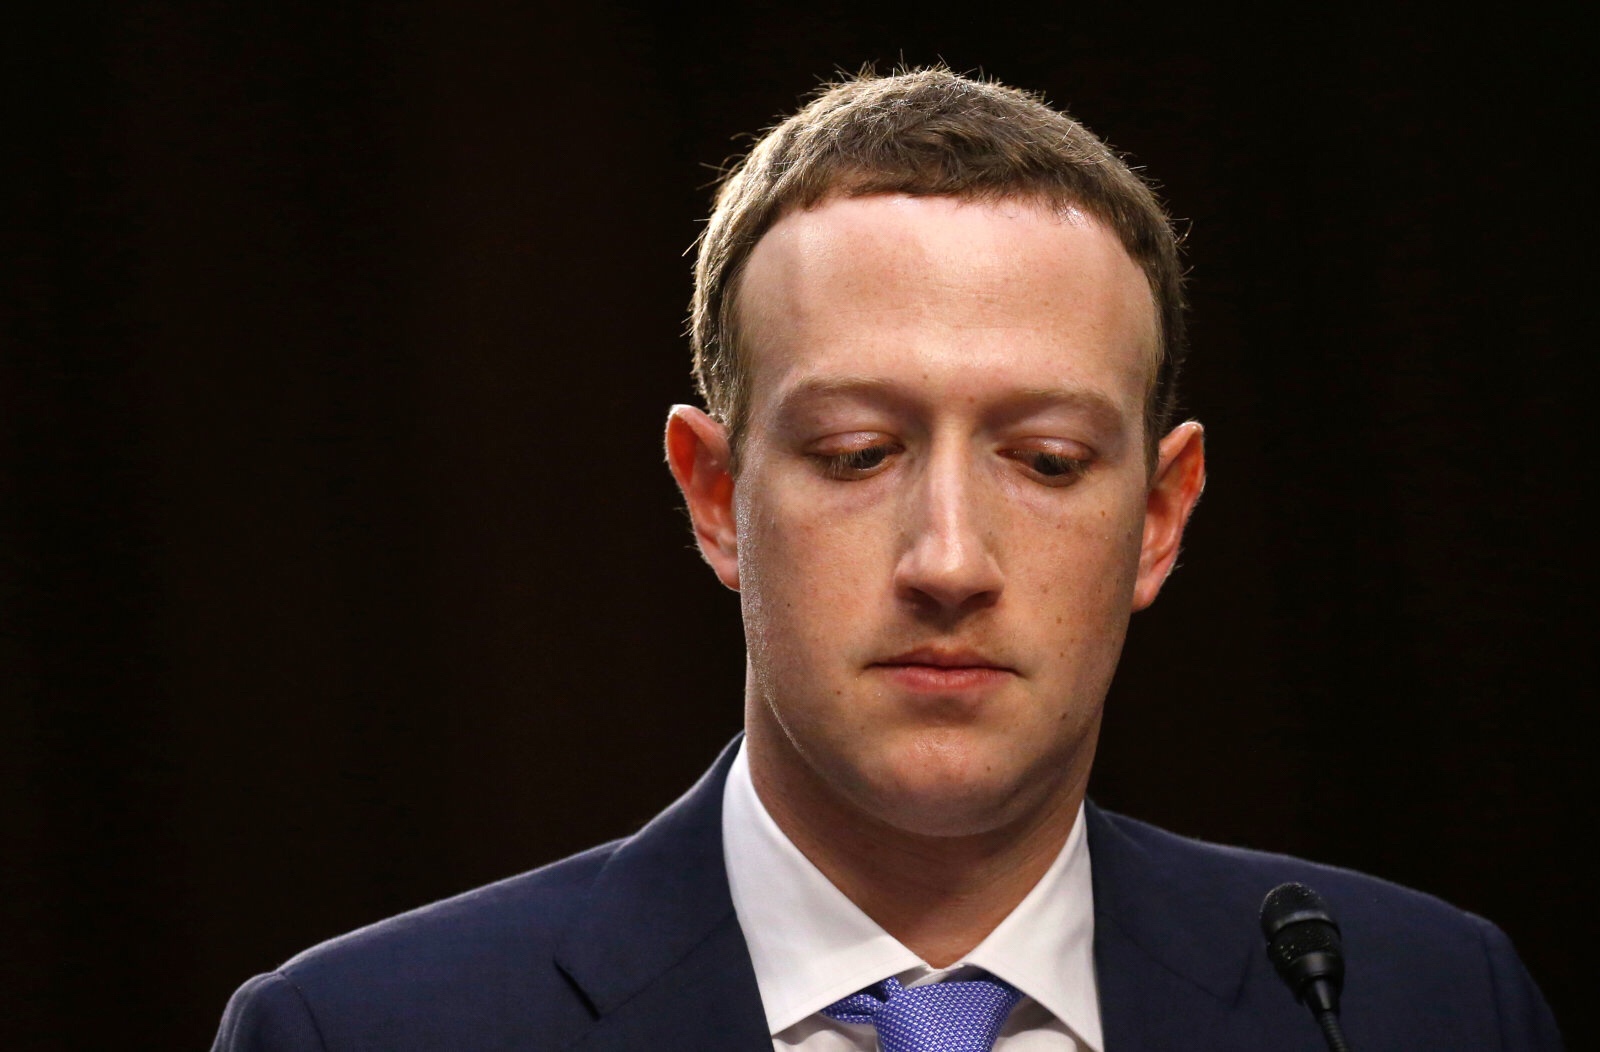 Mark Zuckerberg’s data was accessed by Cambridge Analytica